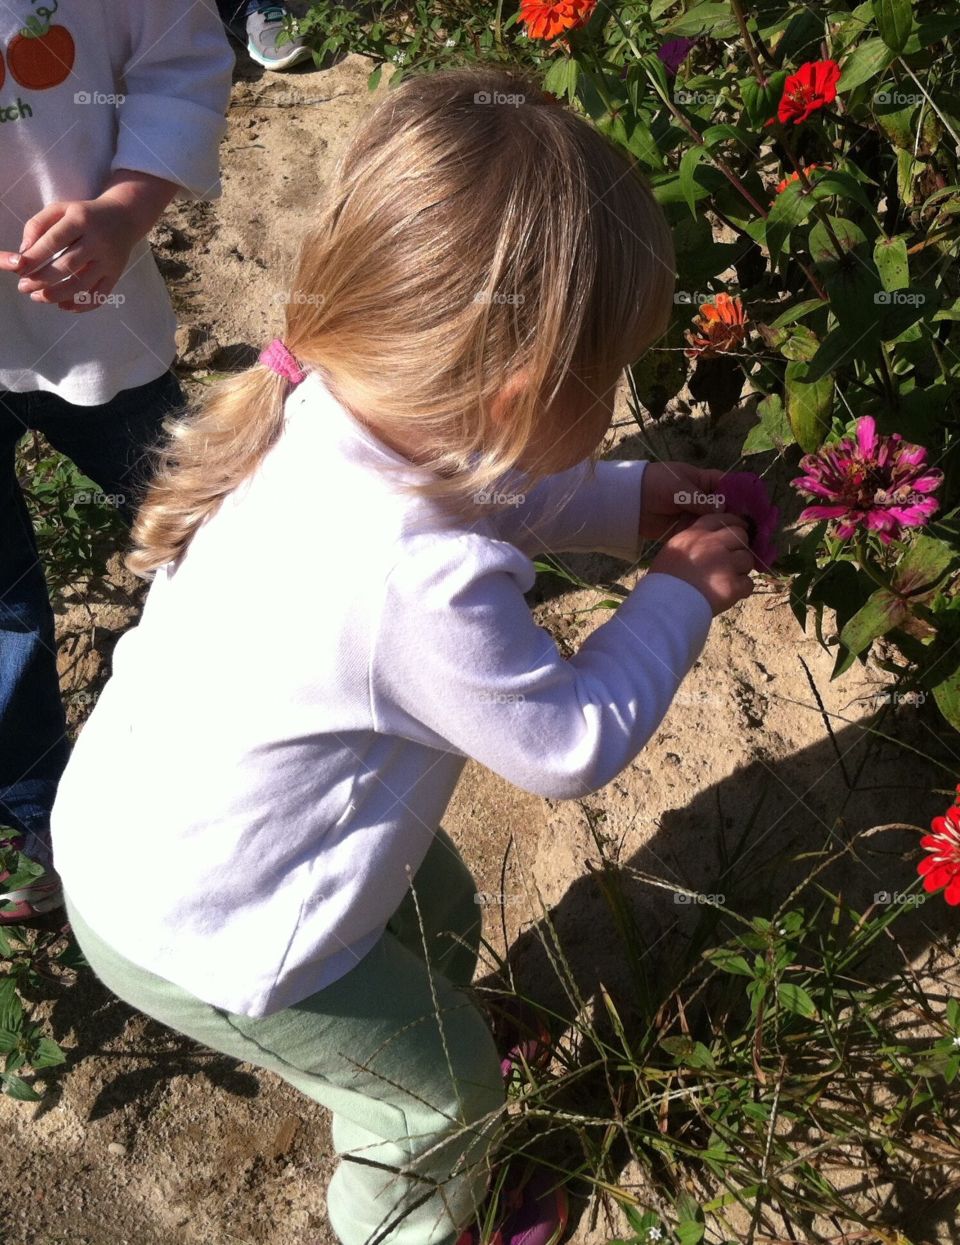 Inspecting the zinnias 